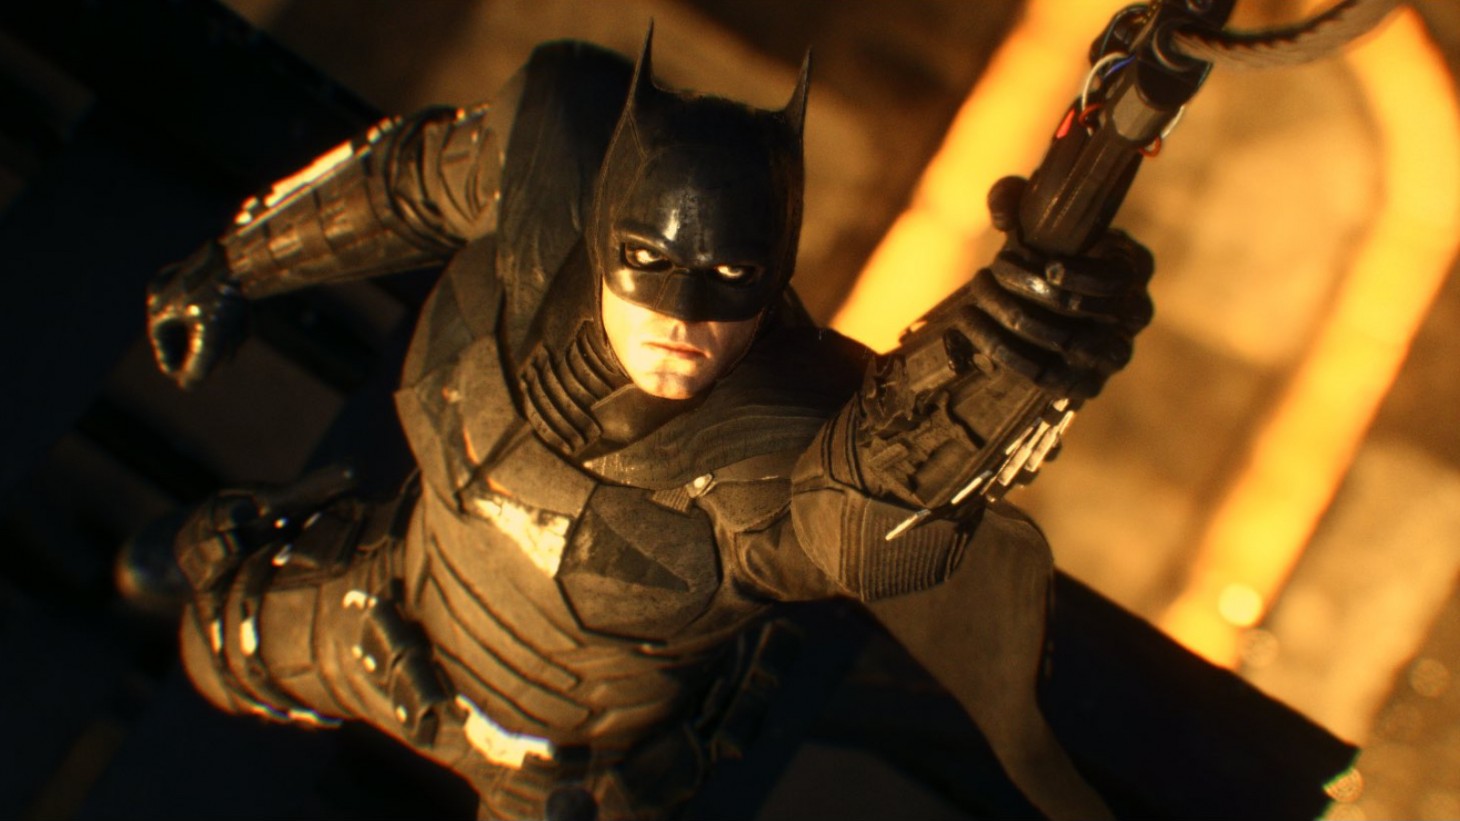 Batman Arkham City Dark Knight Suit Mod 